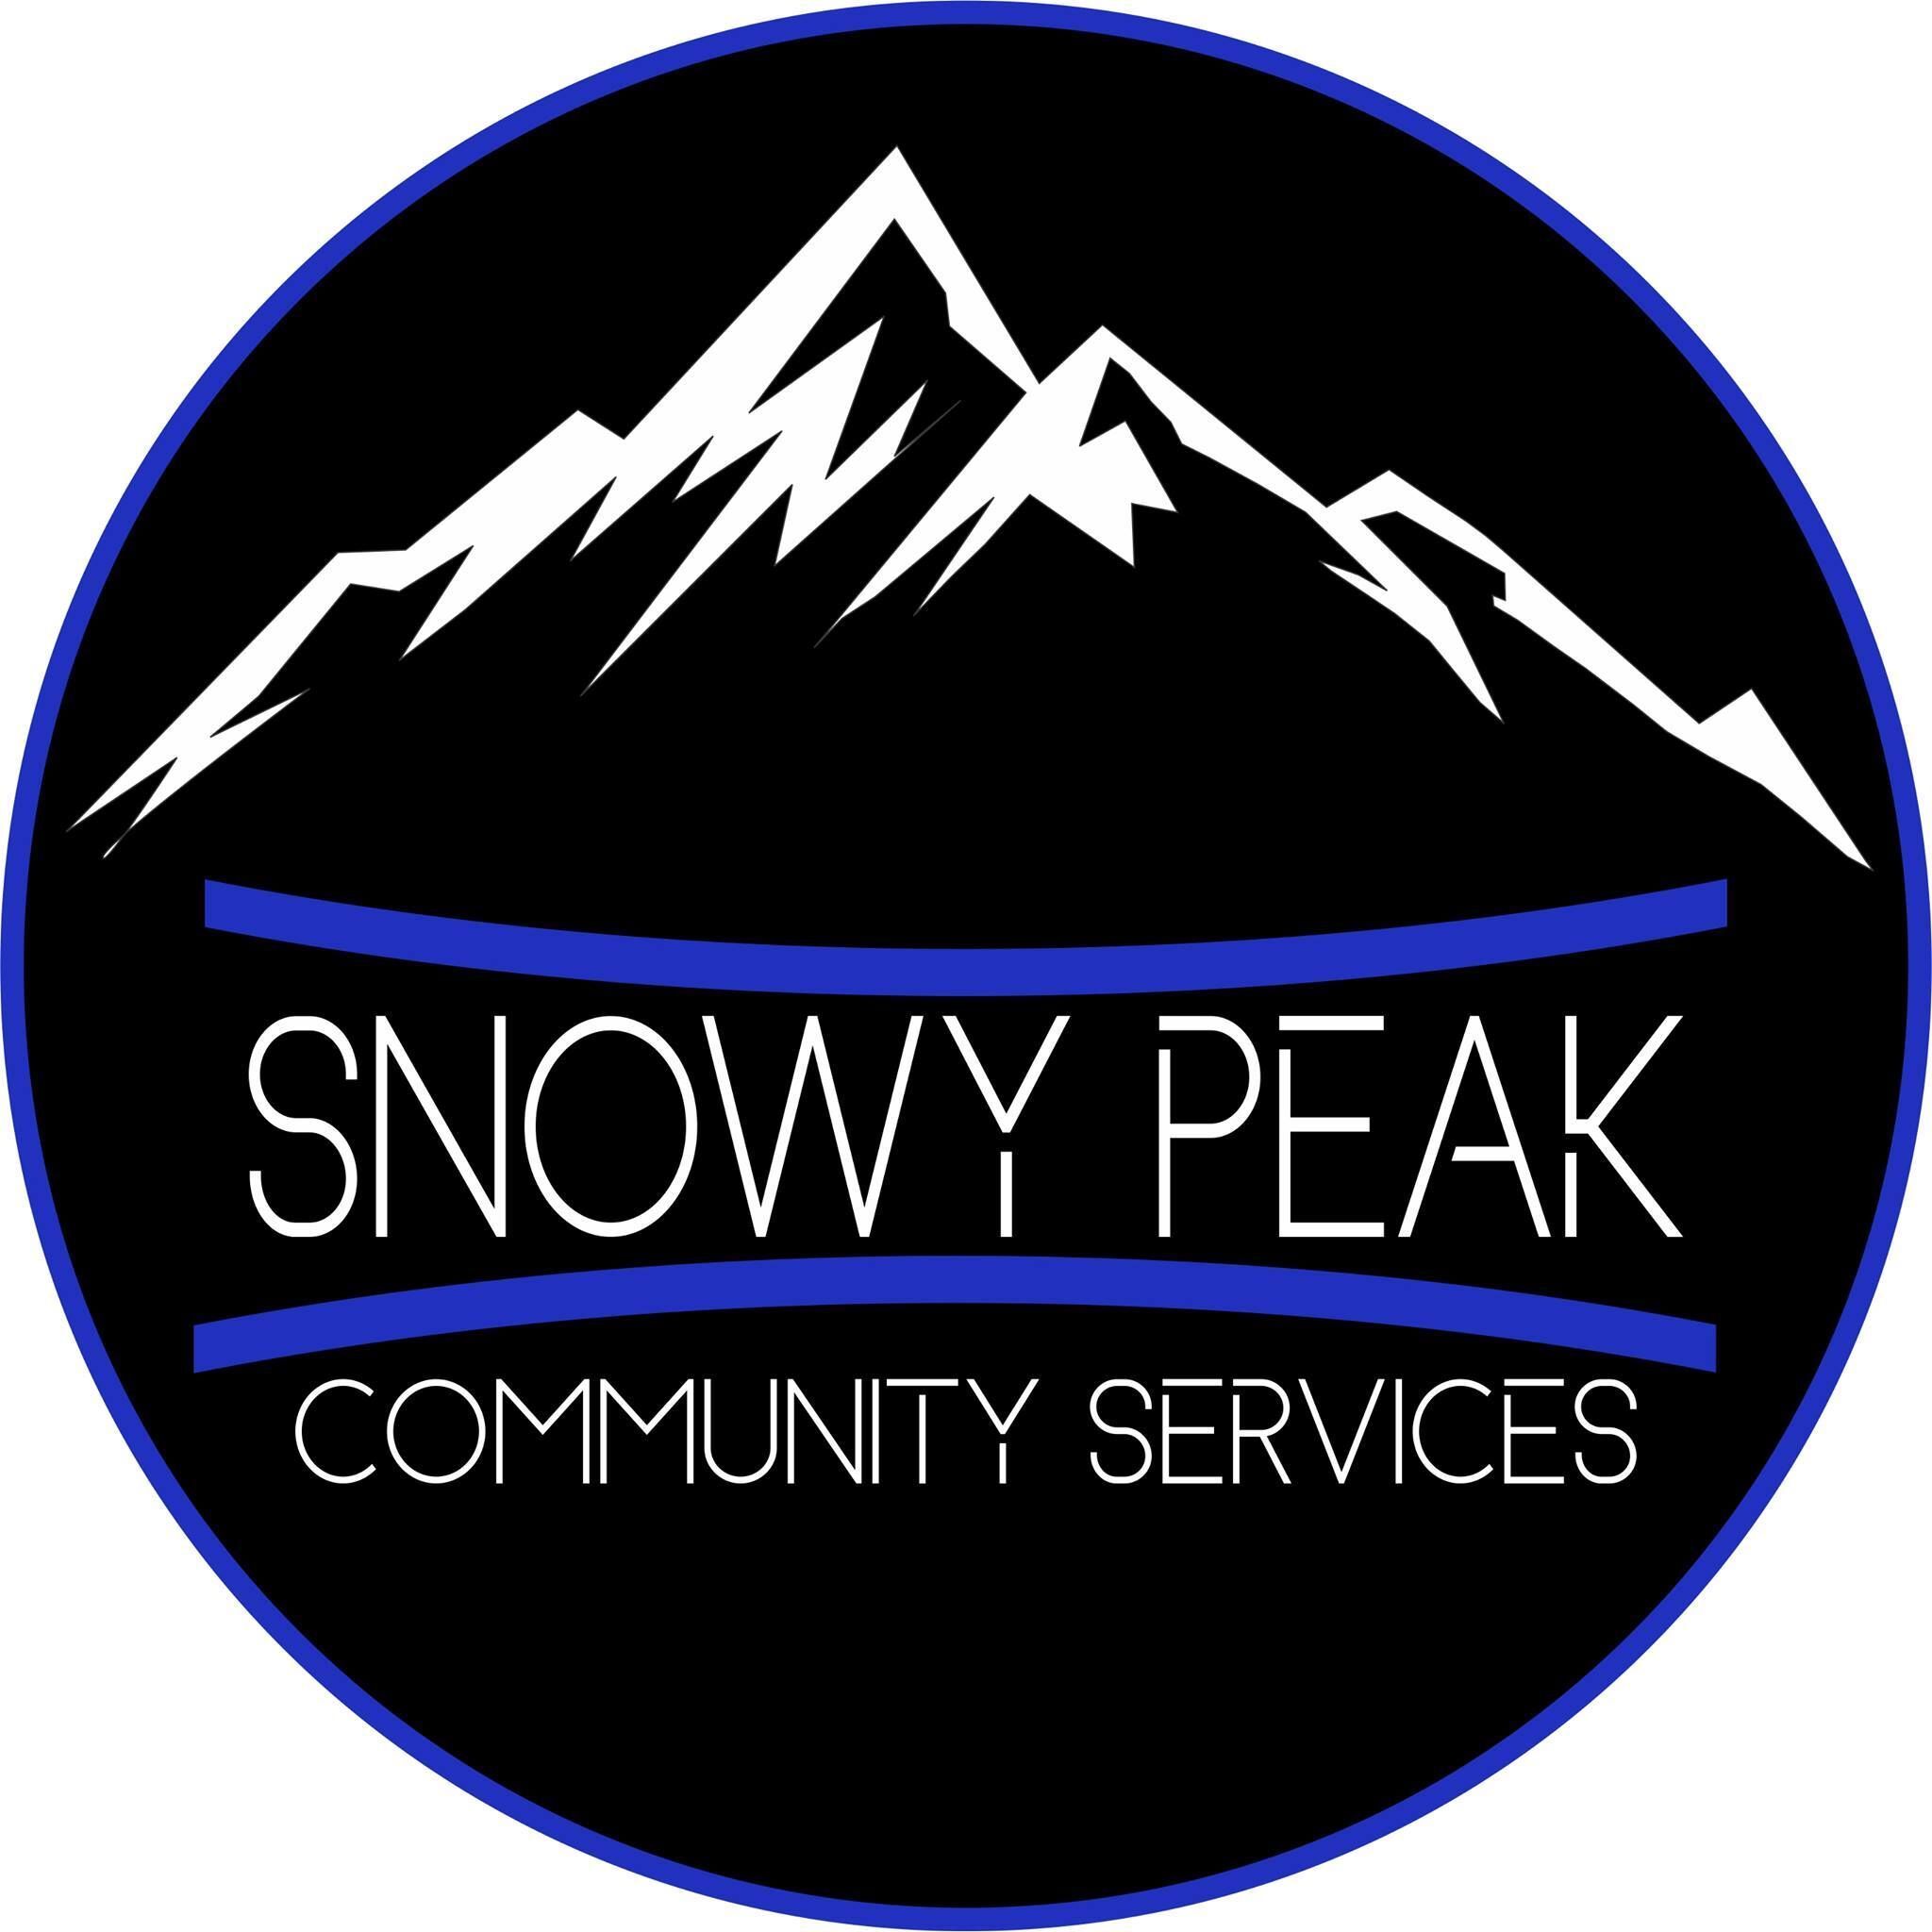 Snowy Peak Community Services